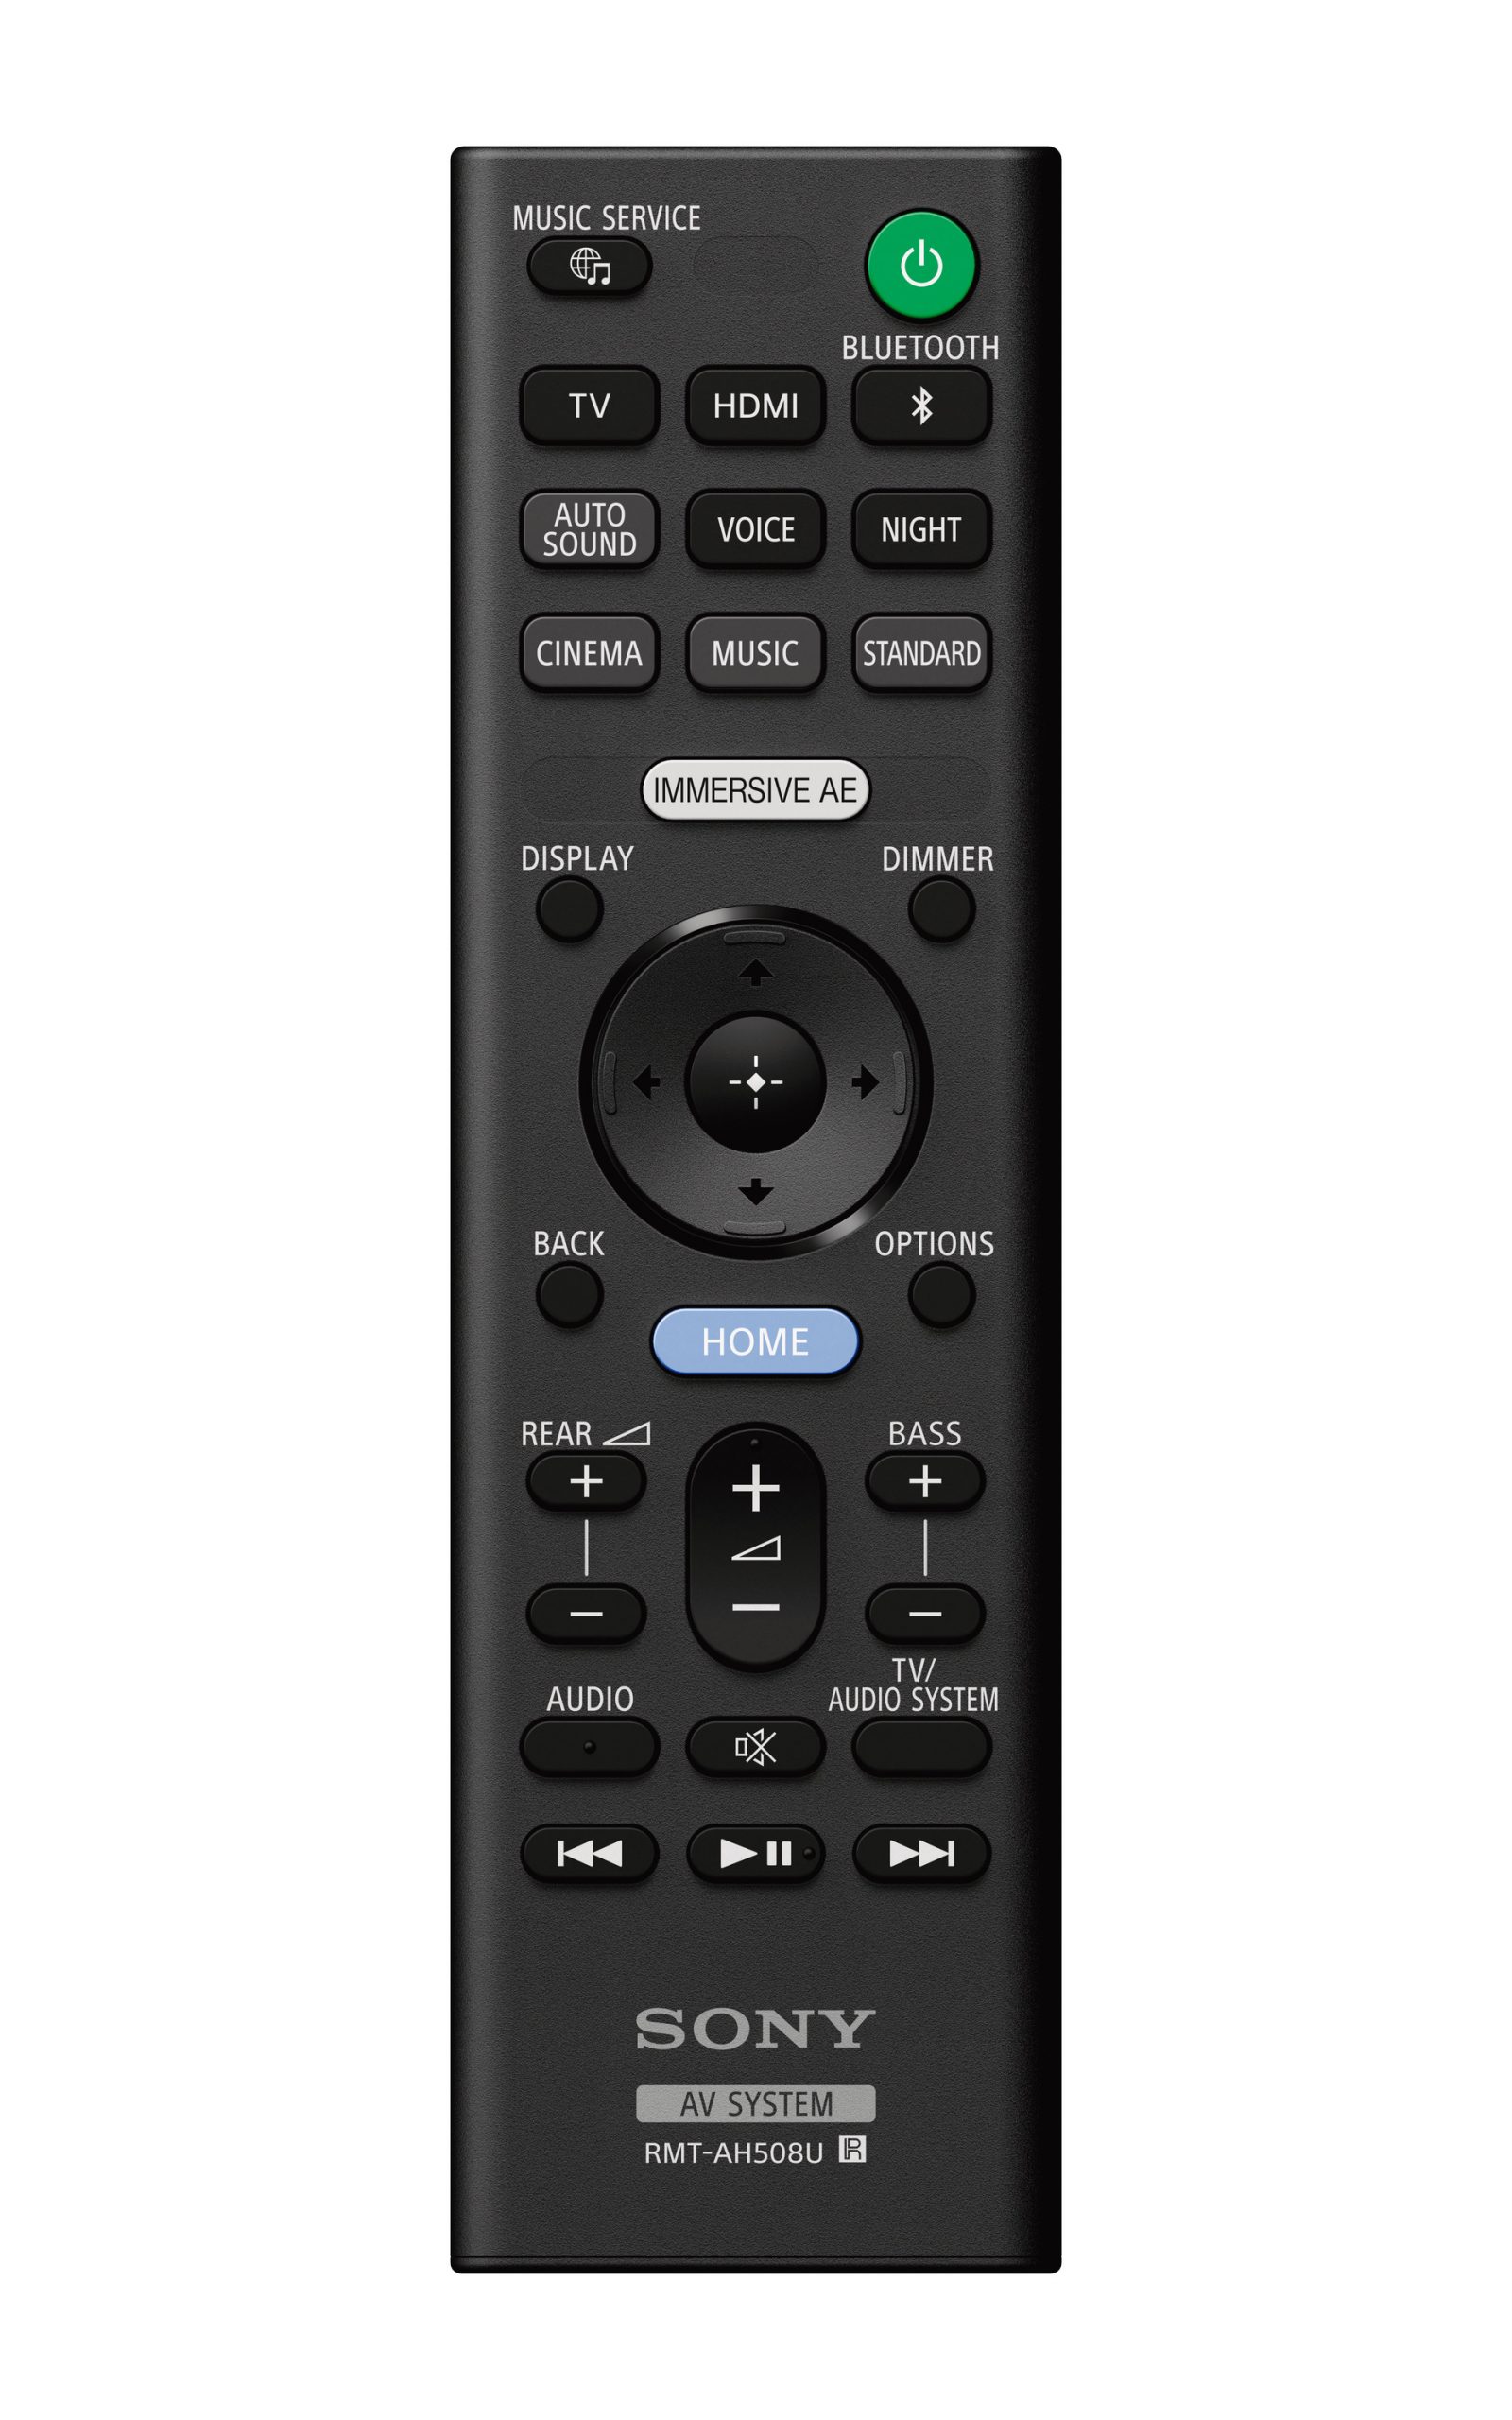 Sony HT-A9 remote